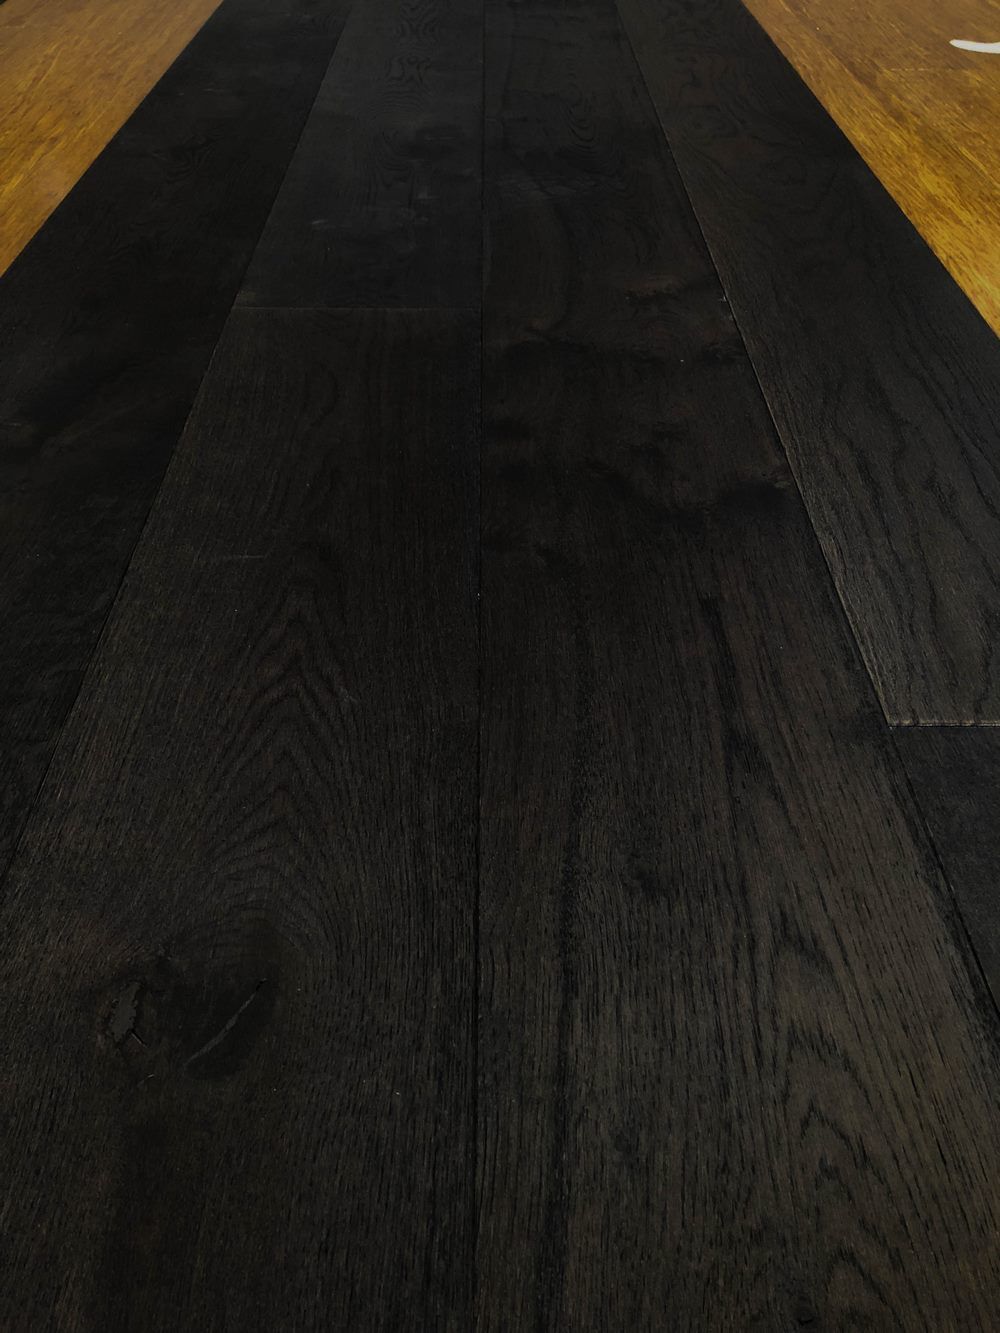 Black Oak Engineered Timber Flooring, Laminate Flooring Black Oak